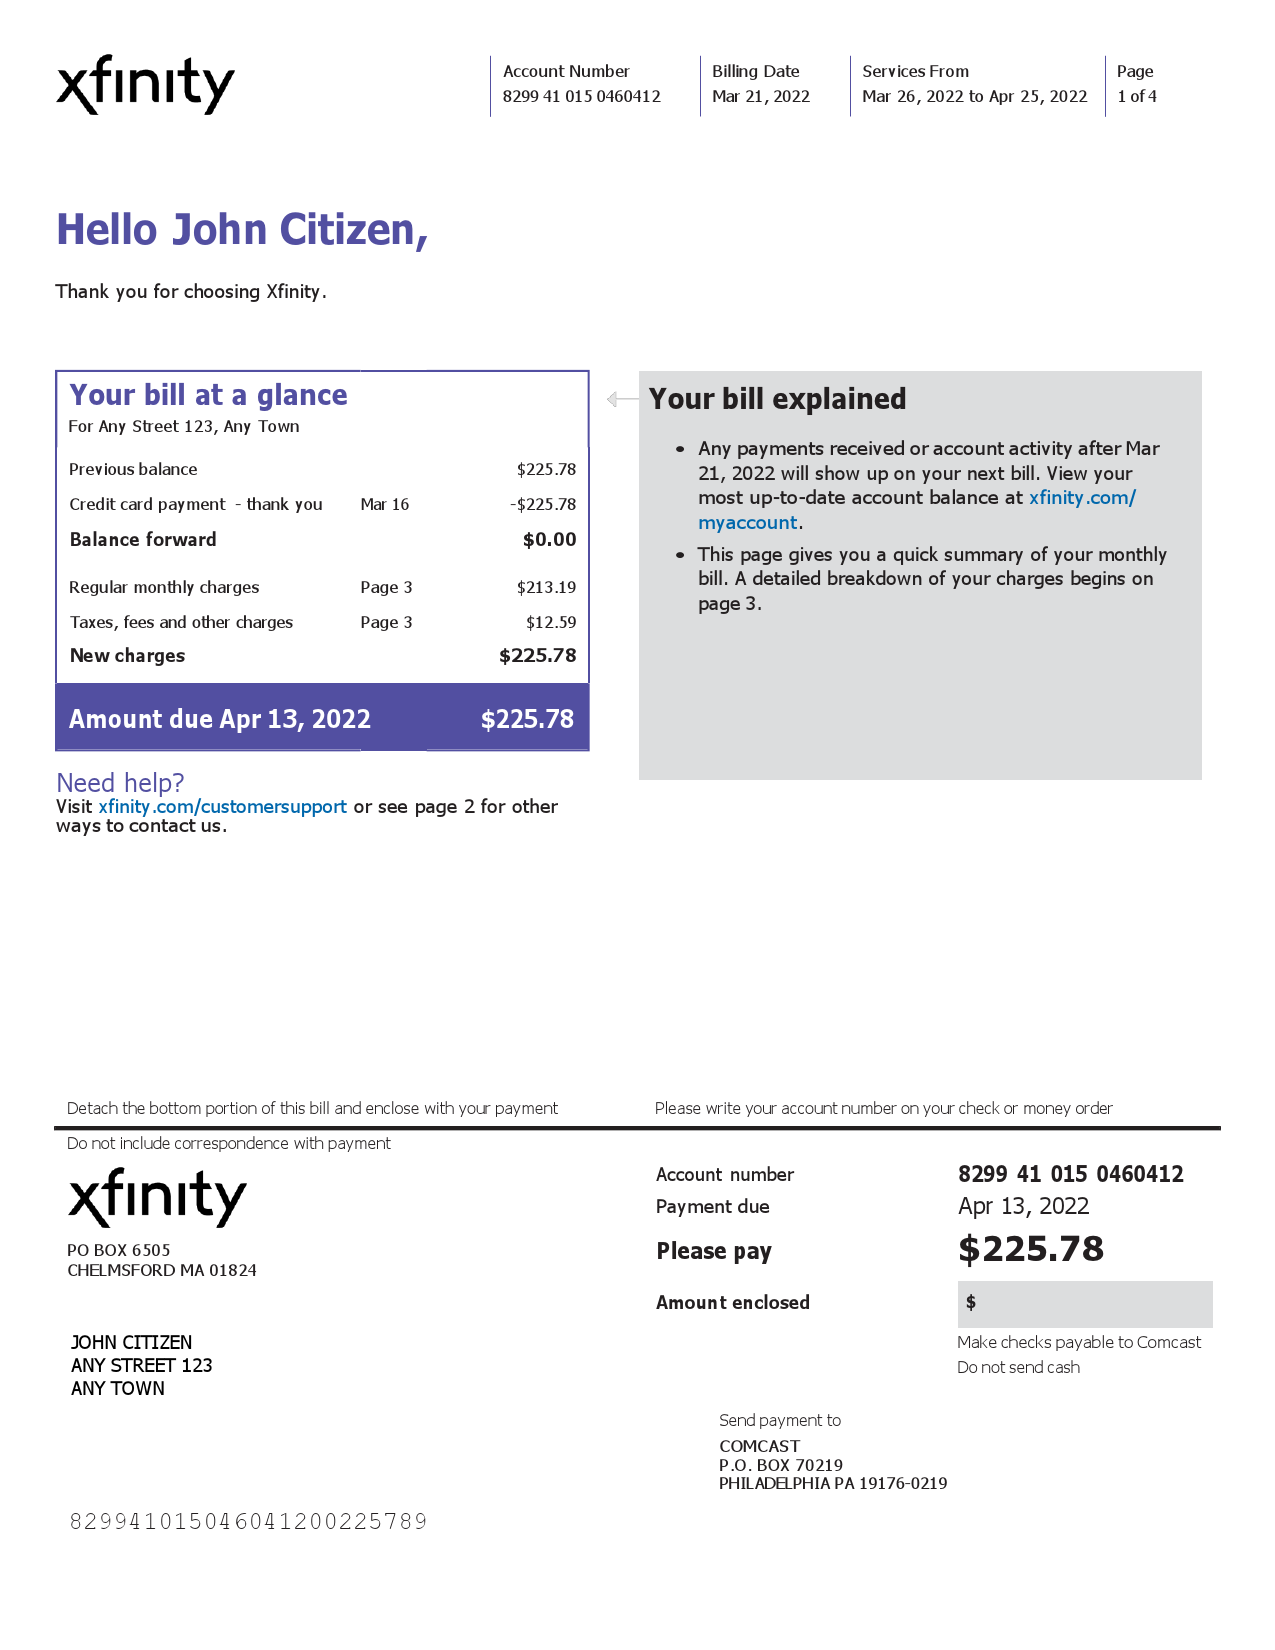 USA Philadelphia Xfinity utility bill Word and PDF template, 4 pages